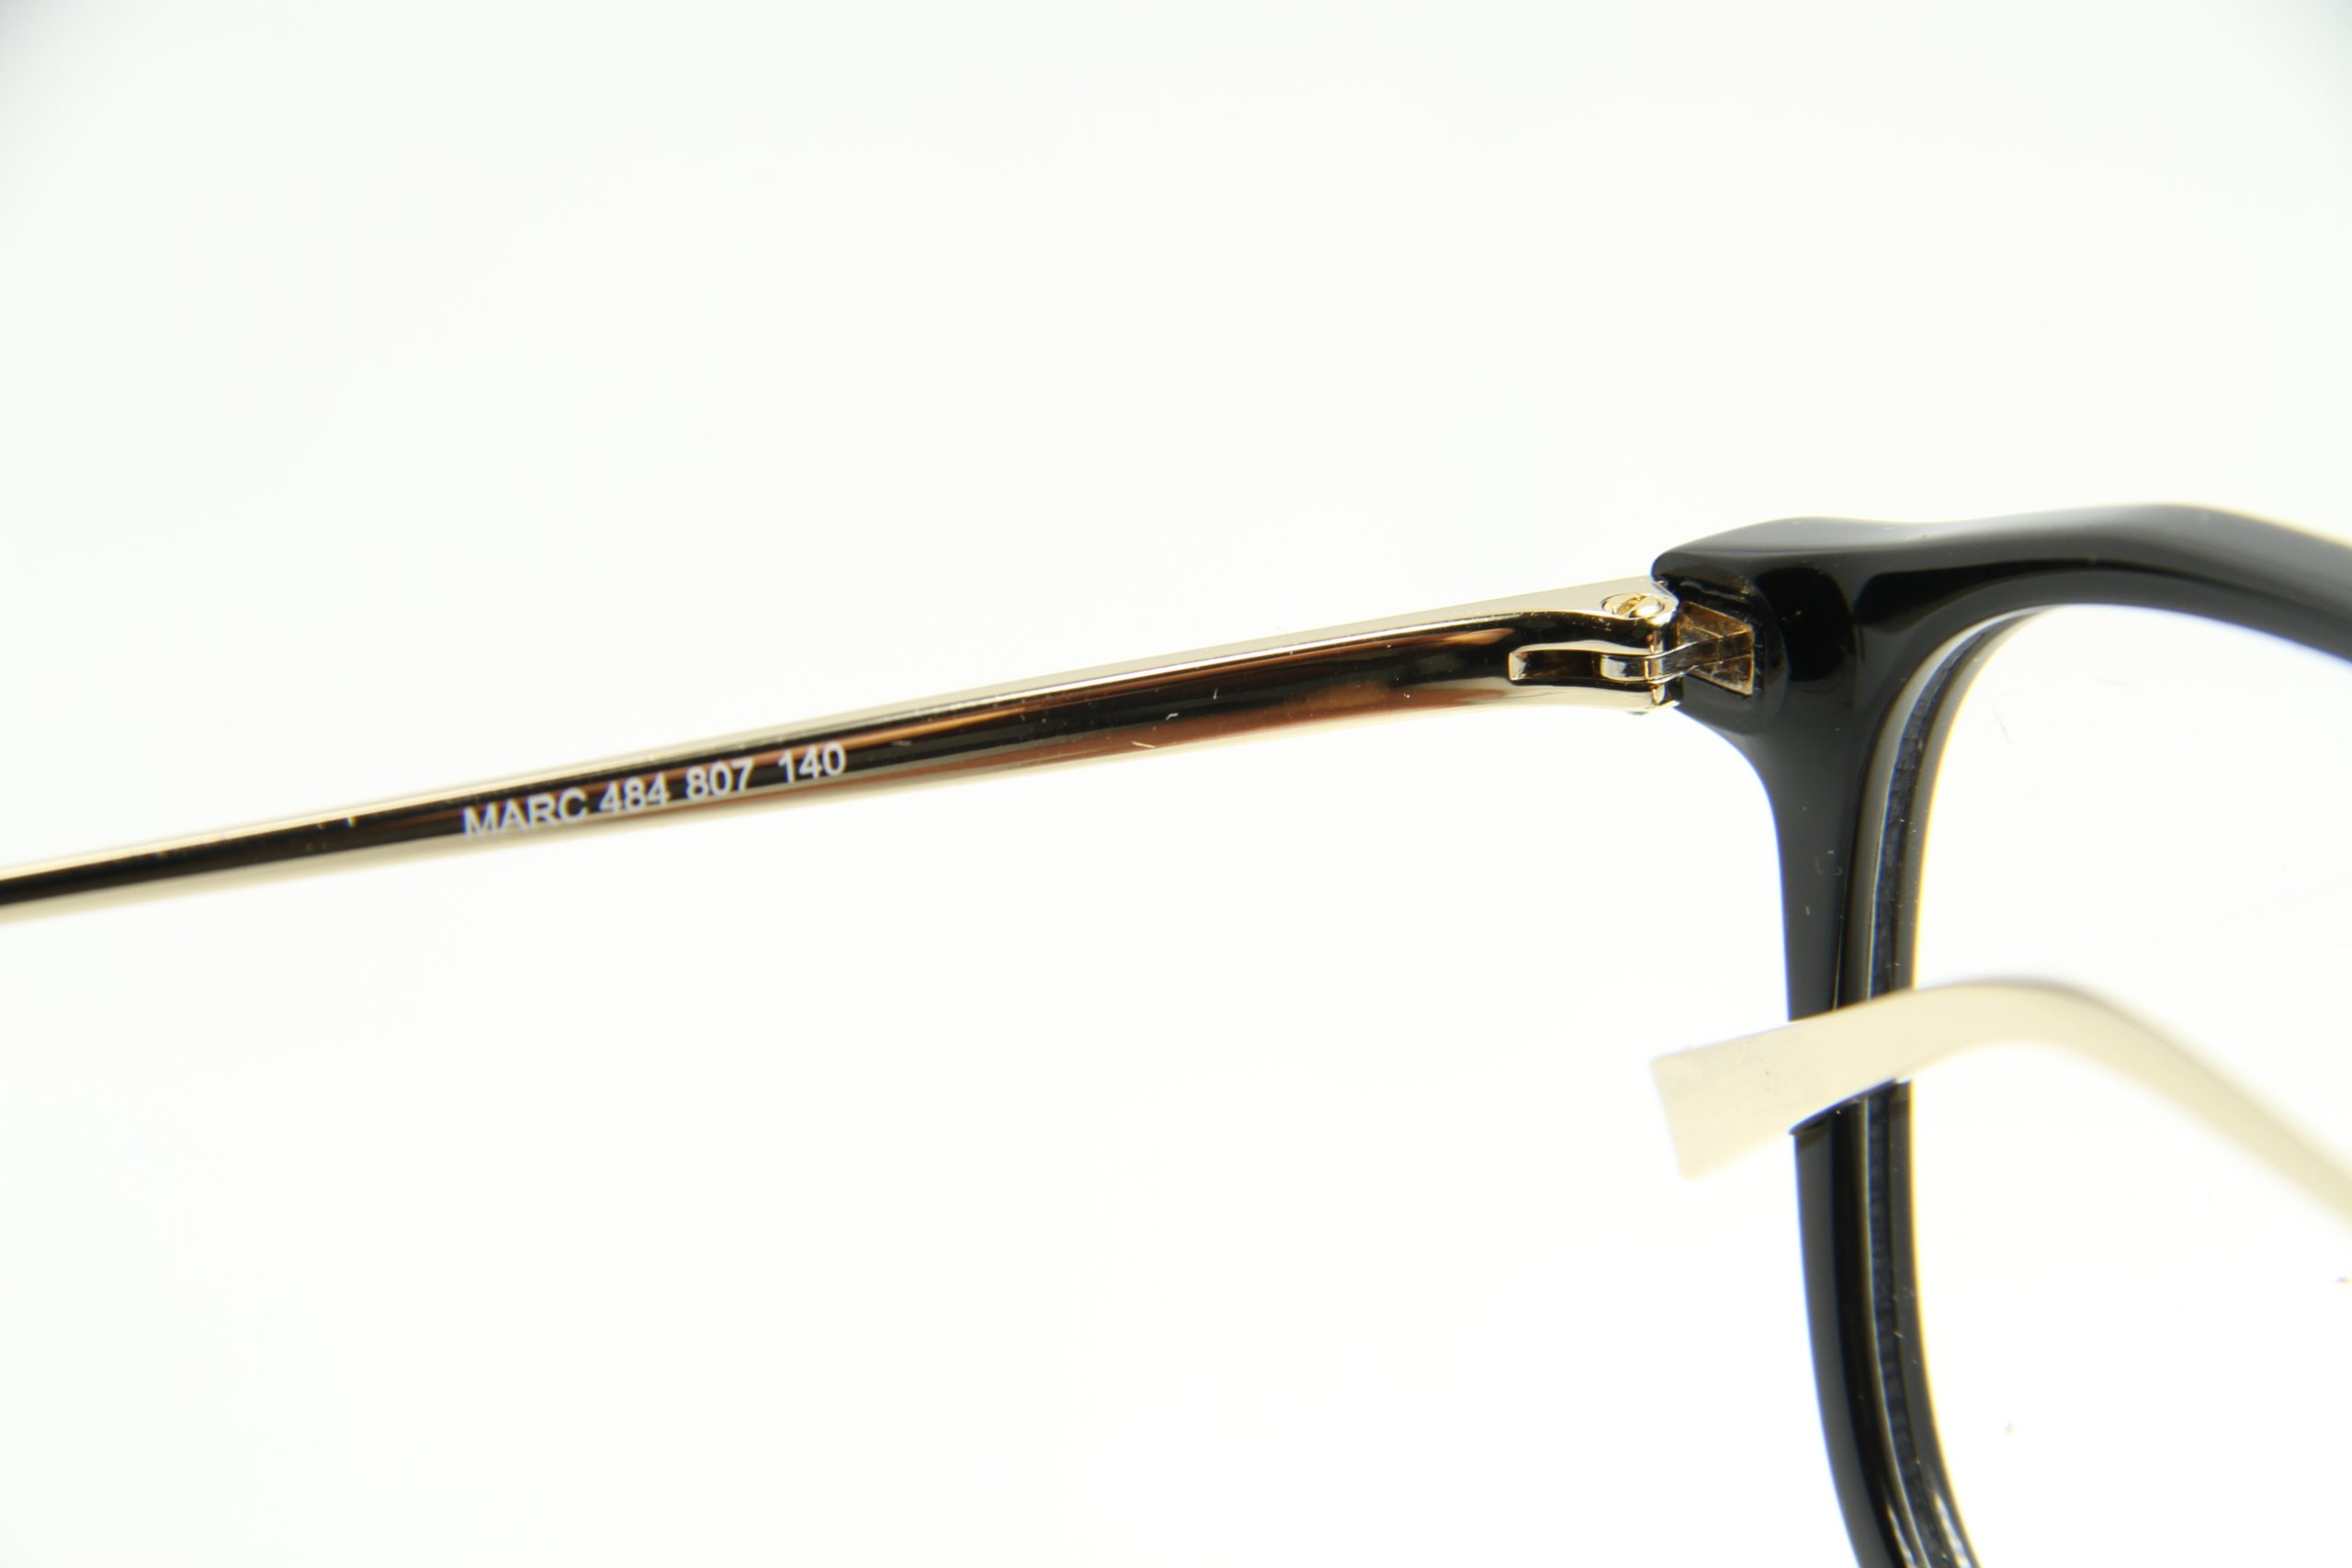 MARC JACOBS 484 Black Eyeglasses Optical Frame | Eyeworld Market